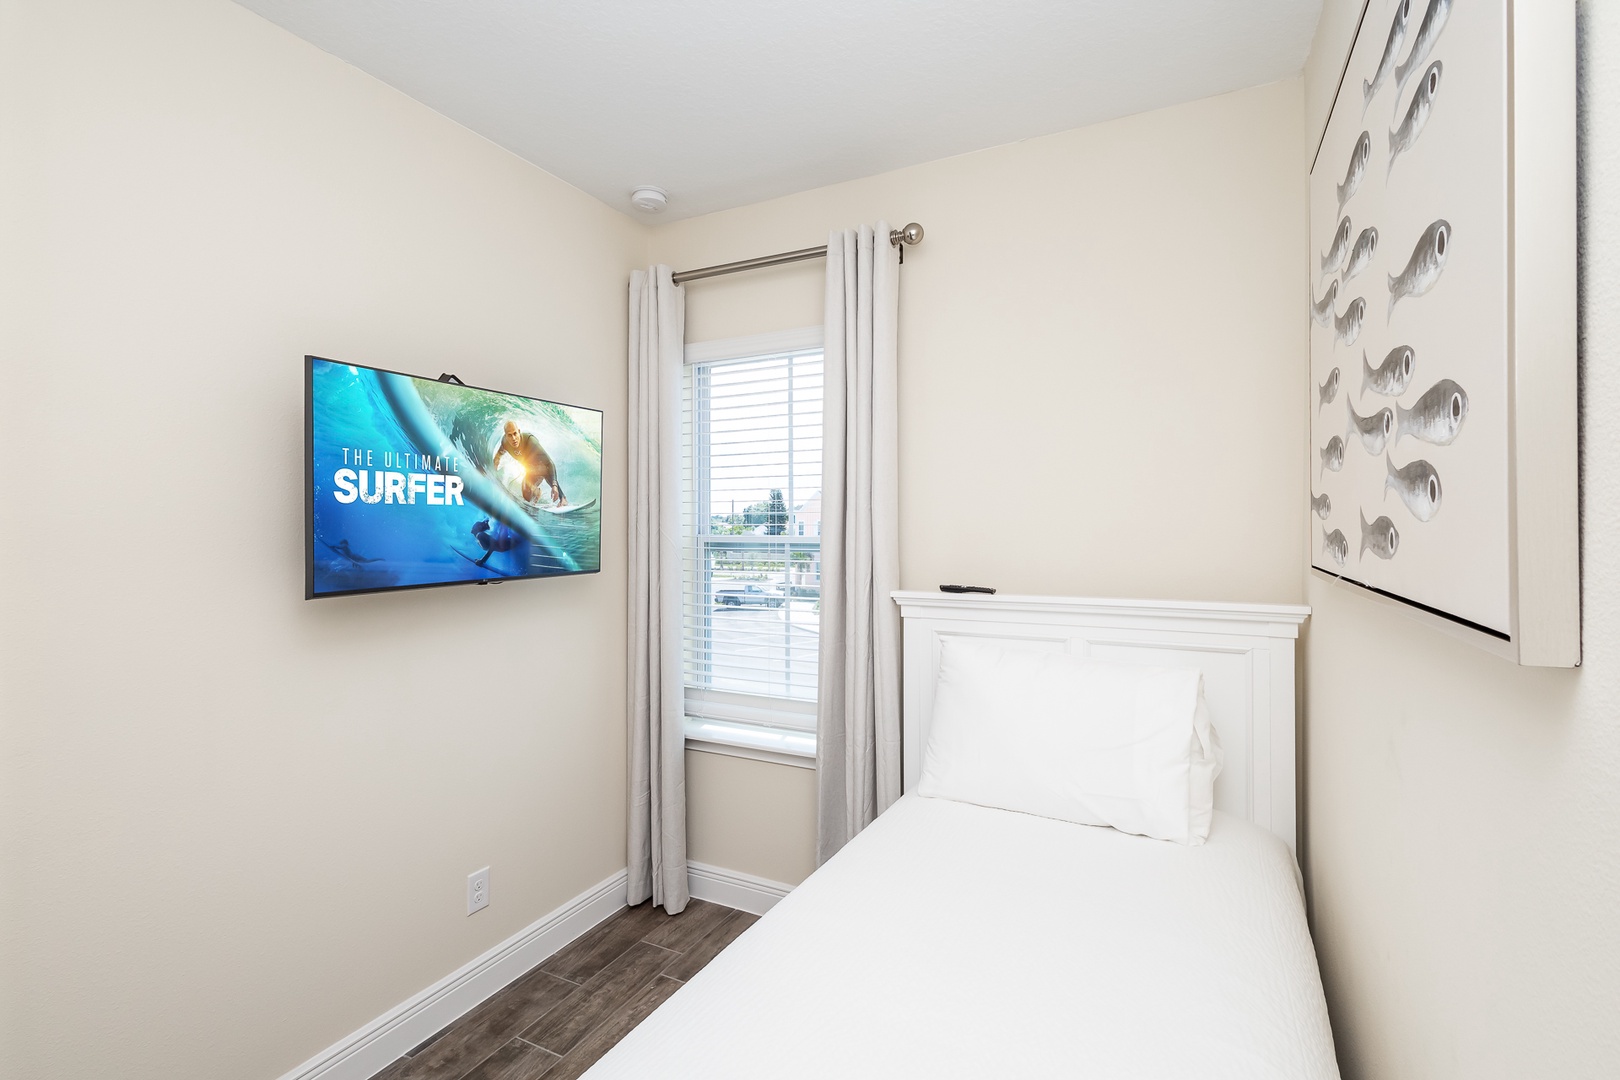 An additional bonus sleeping area with a twin bed & Smart TV awaits